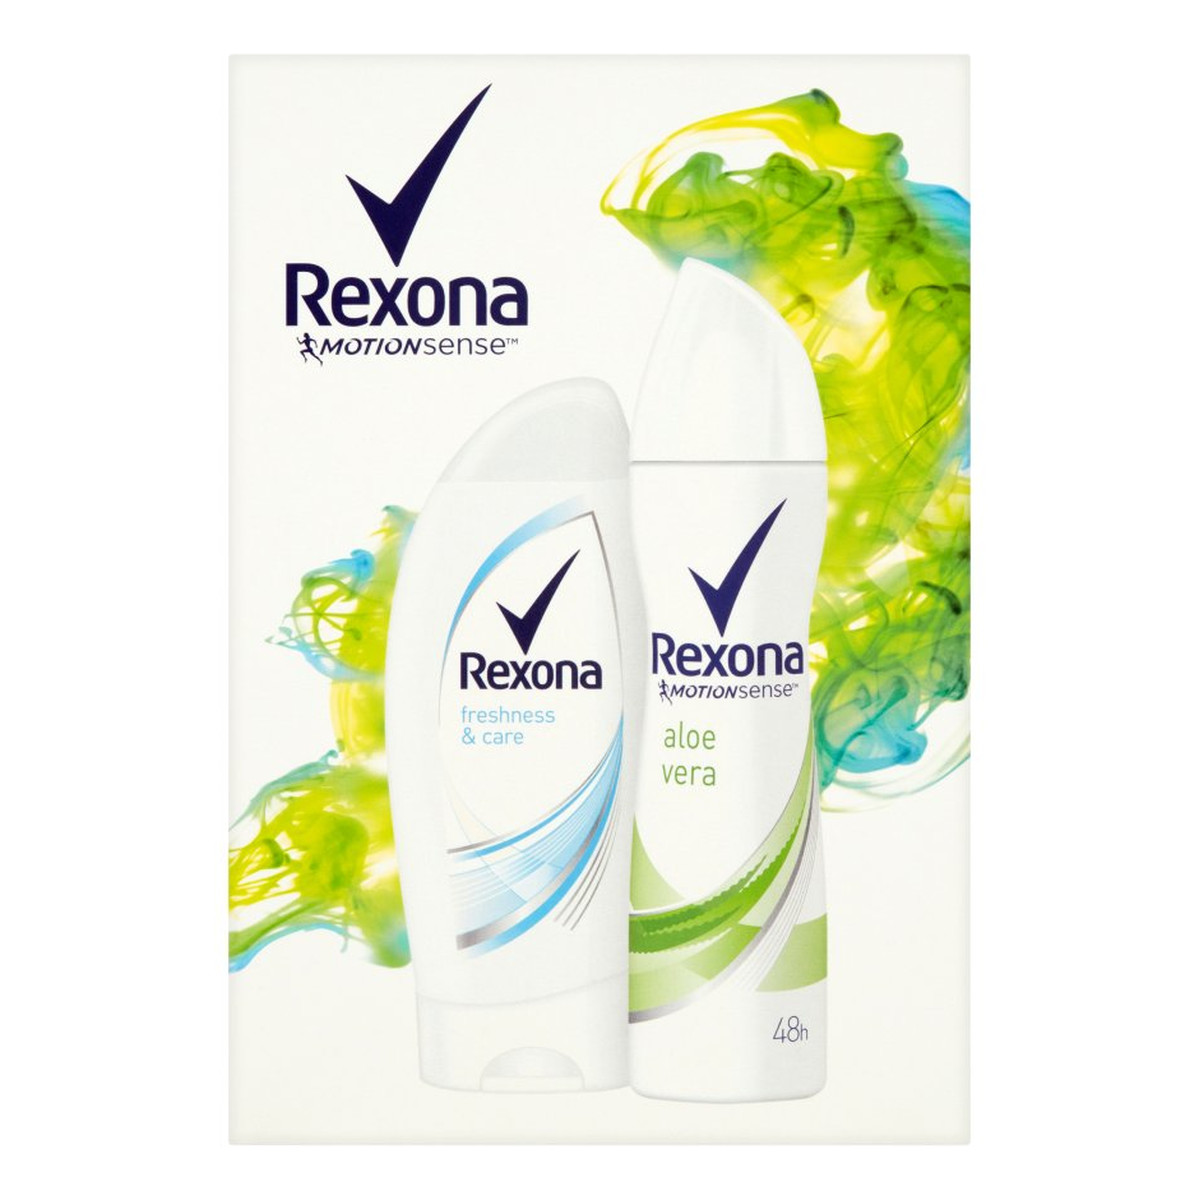 Rexona Motion sense Aloe Vera i Freshness & Care Zestaw kosmetyków